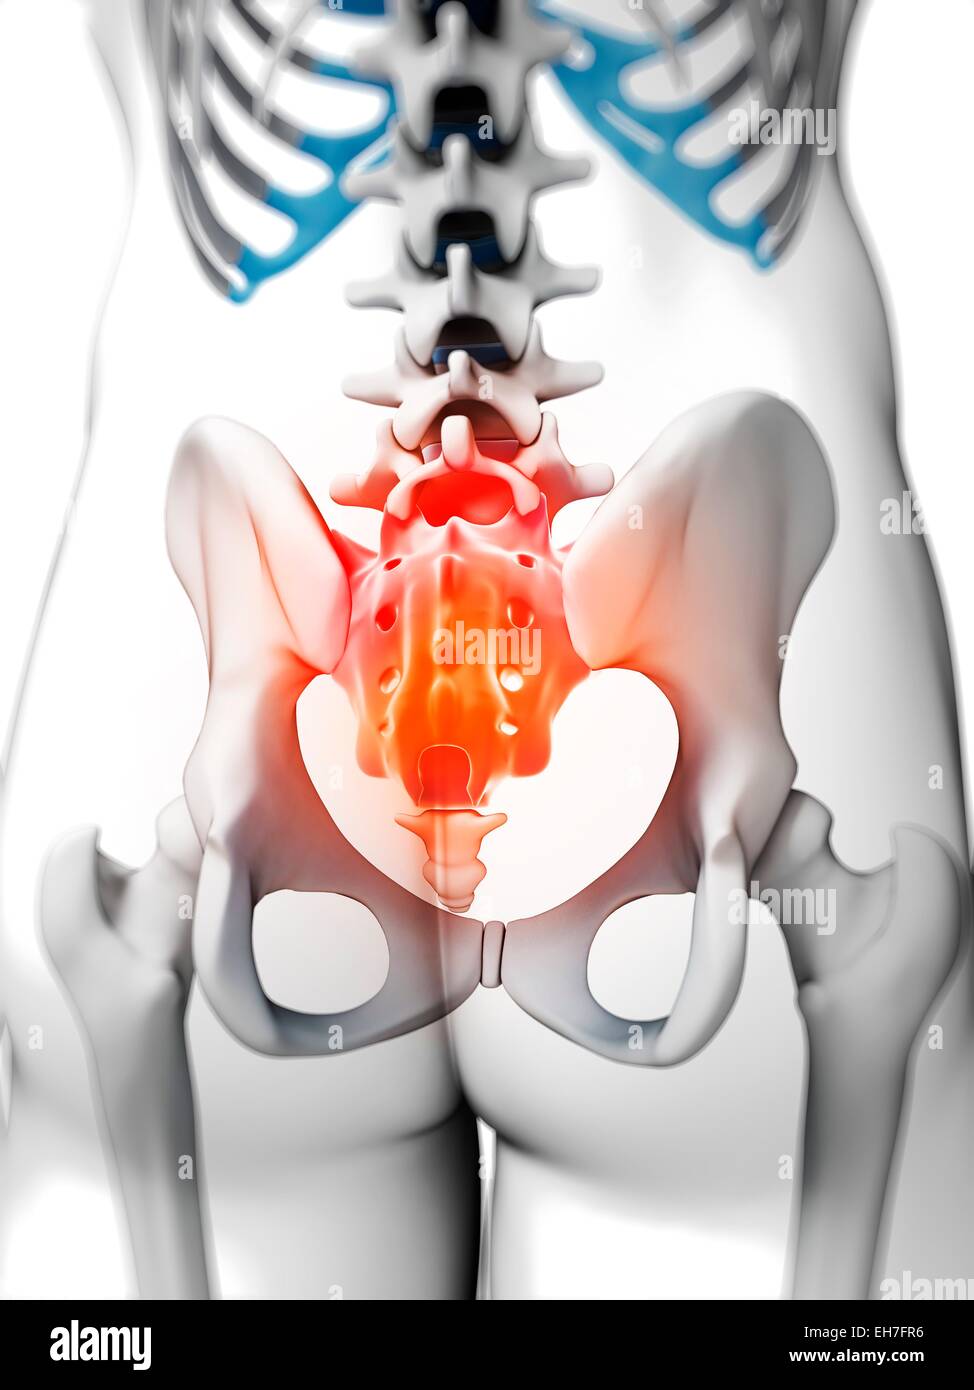 Human back pain, artwork Stock Photo